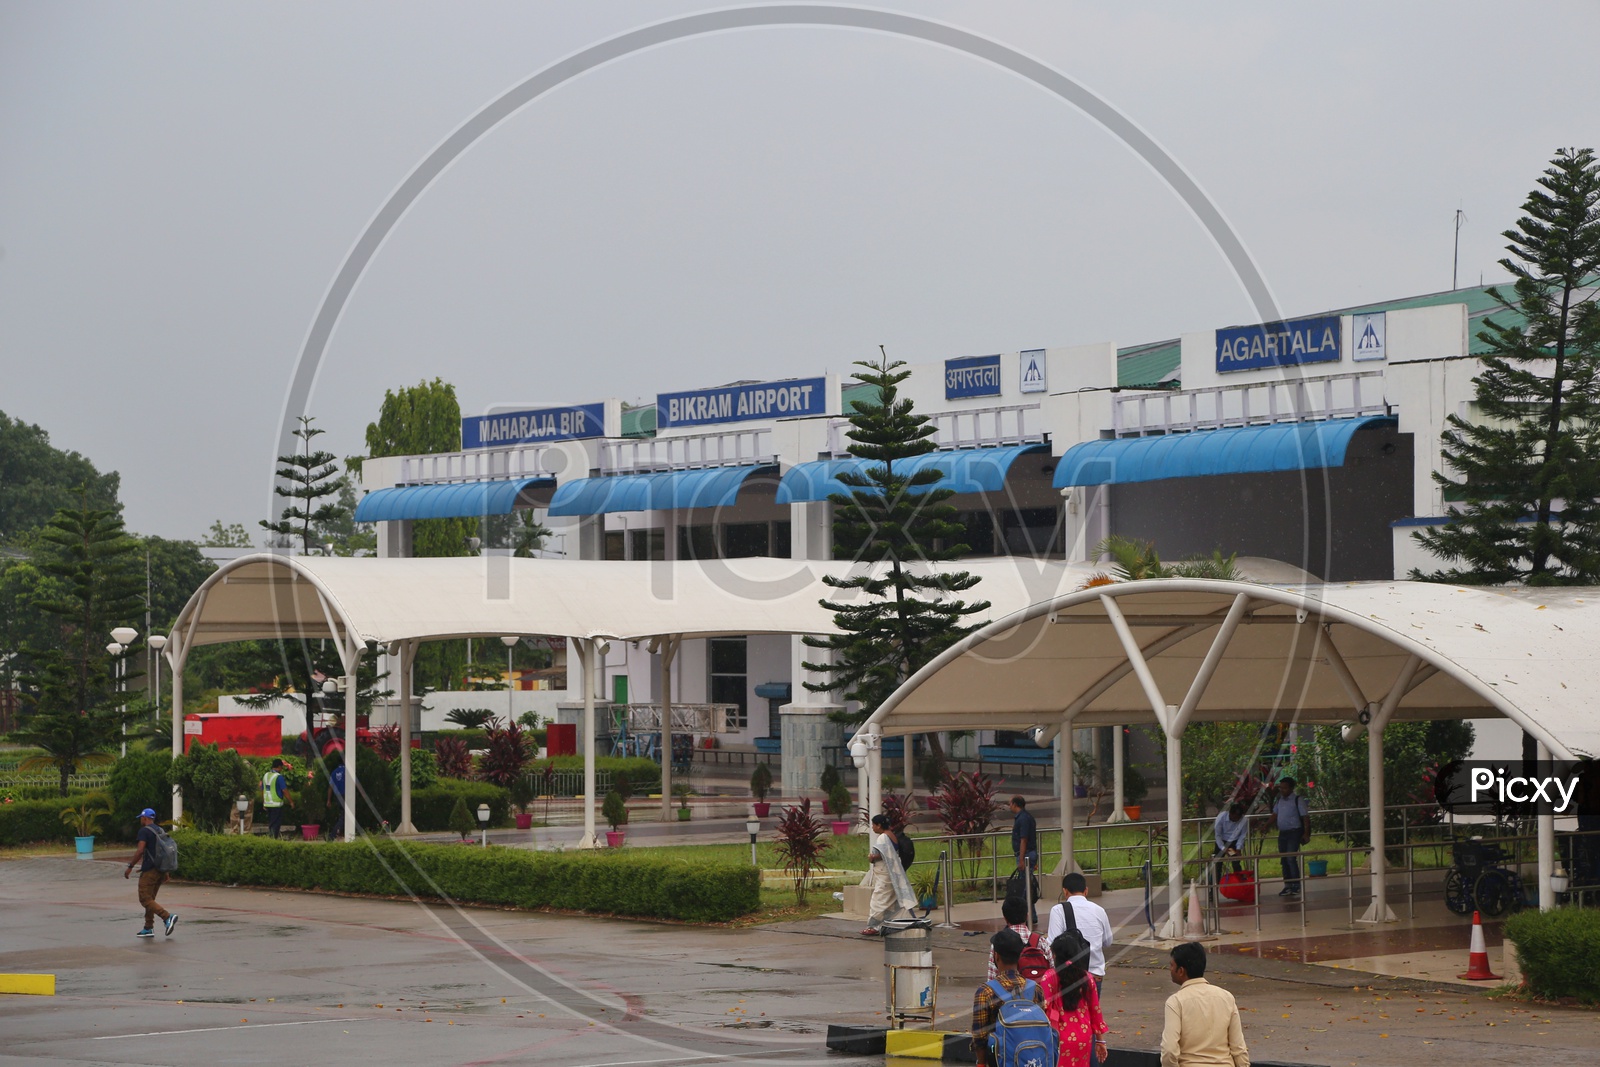 Maharaj bir bikram airport. Tripura airport